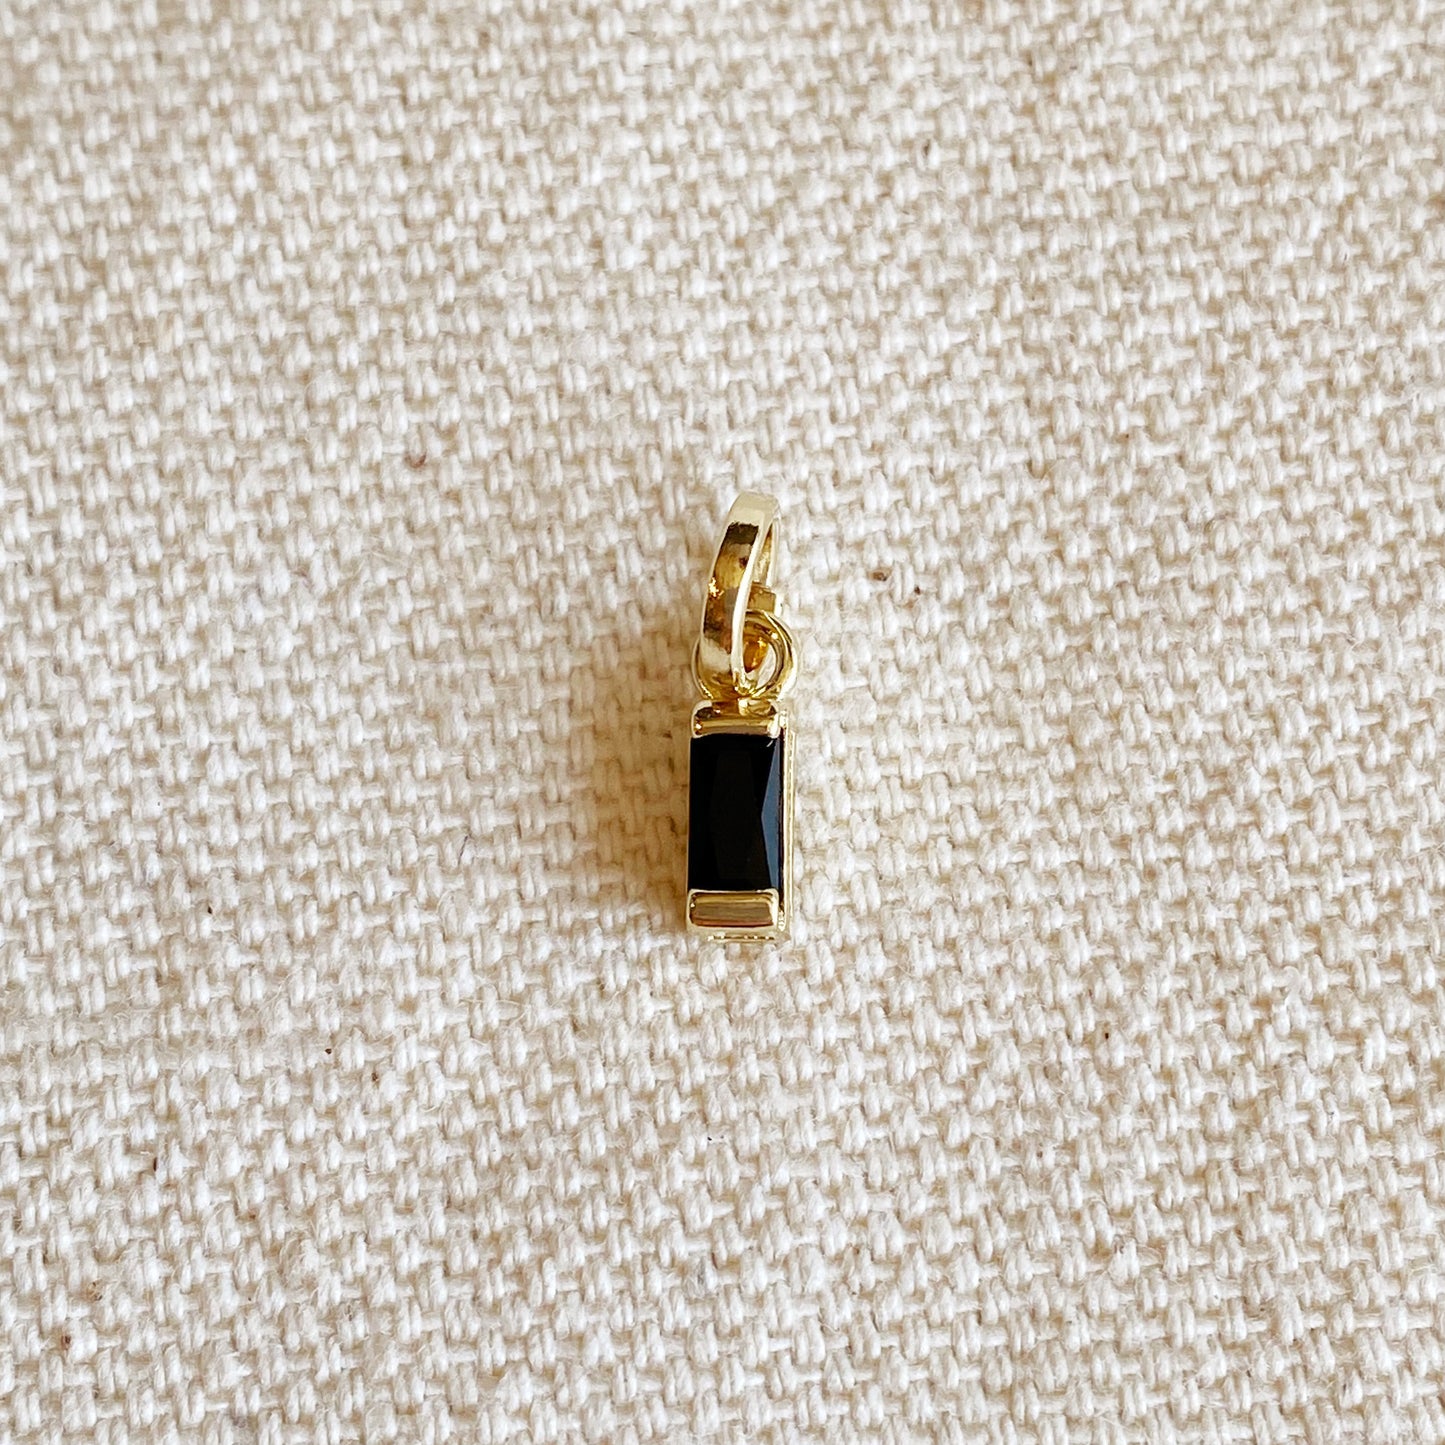 18k Gold Filled Mini Black Baguette Charm Pendant